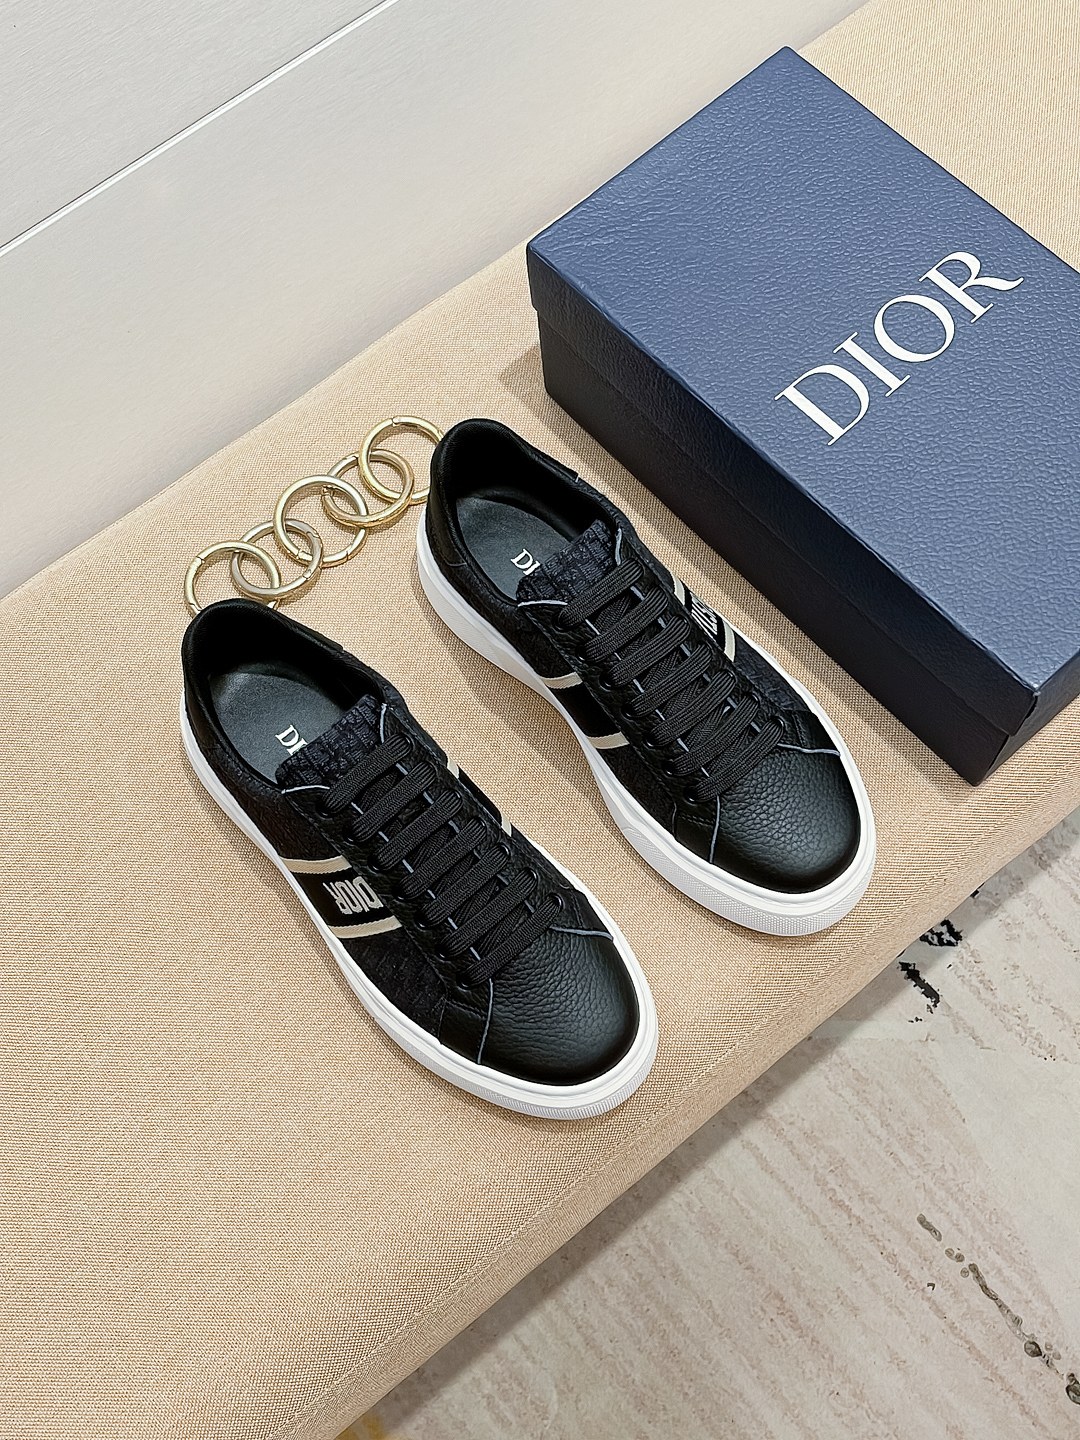 dior 靴 メンズ激安通販 ランニング 運動風 スポーツシューズ プレゼント 3色可選 ブラック_2